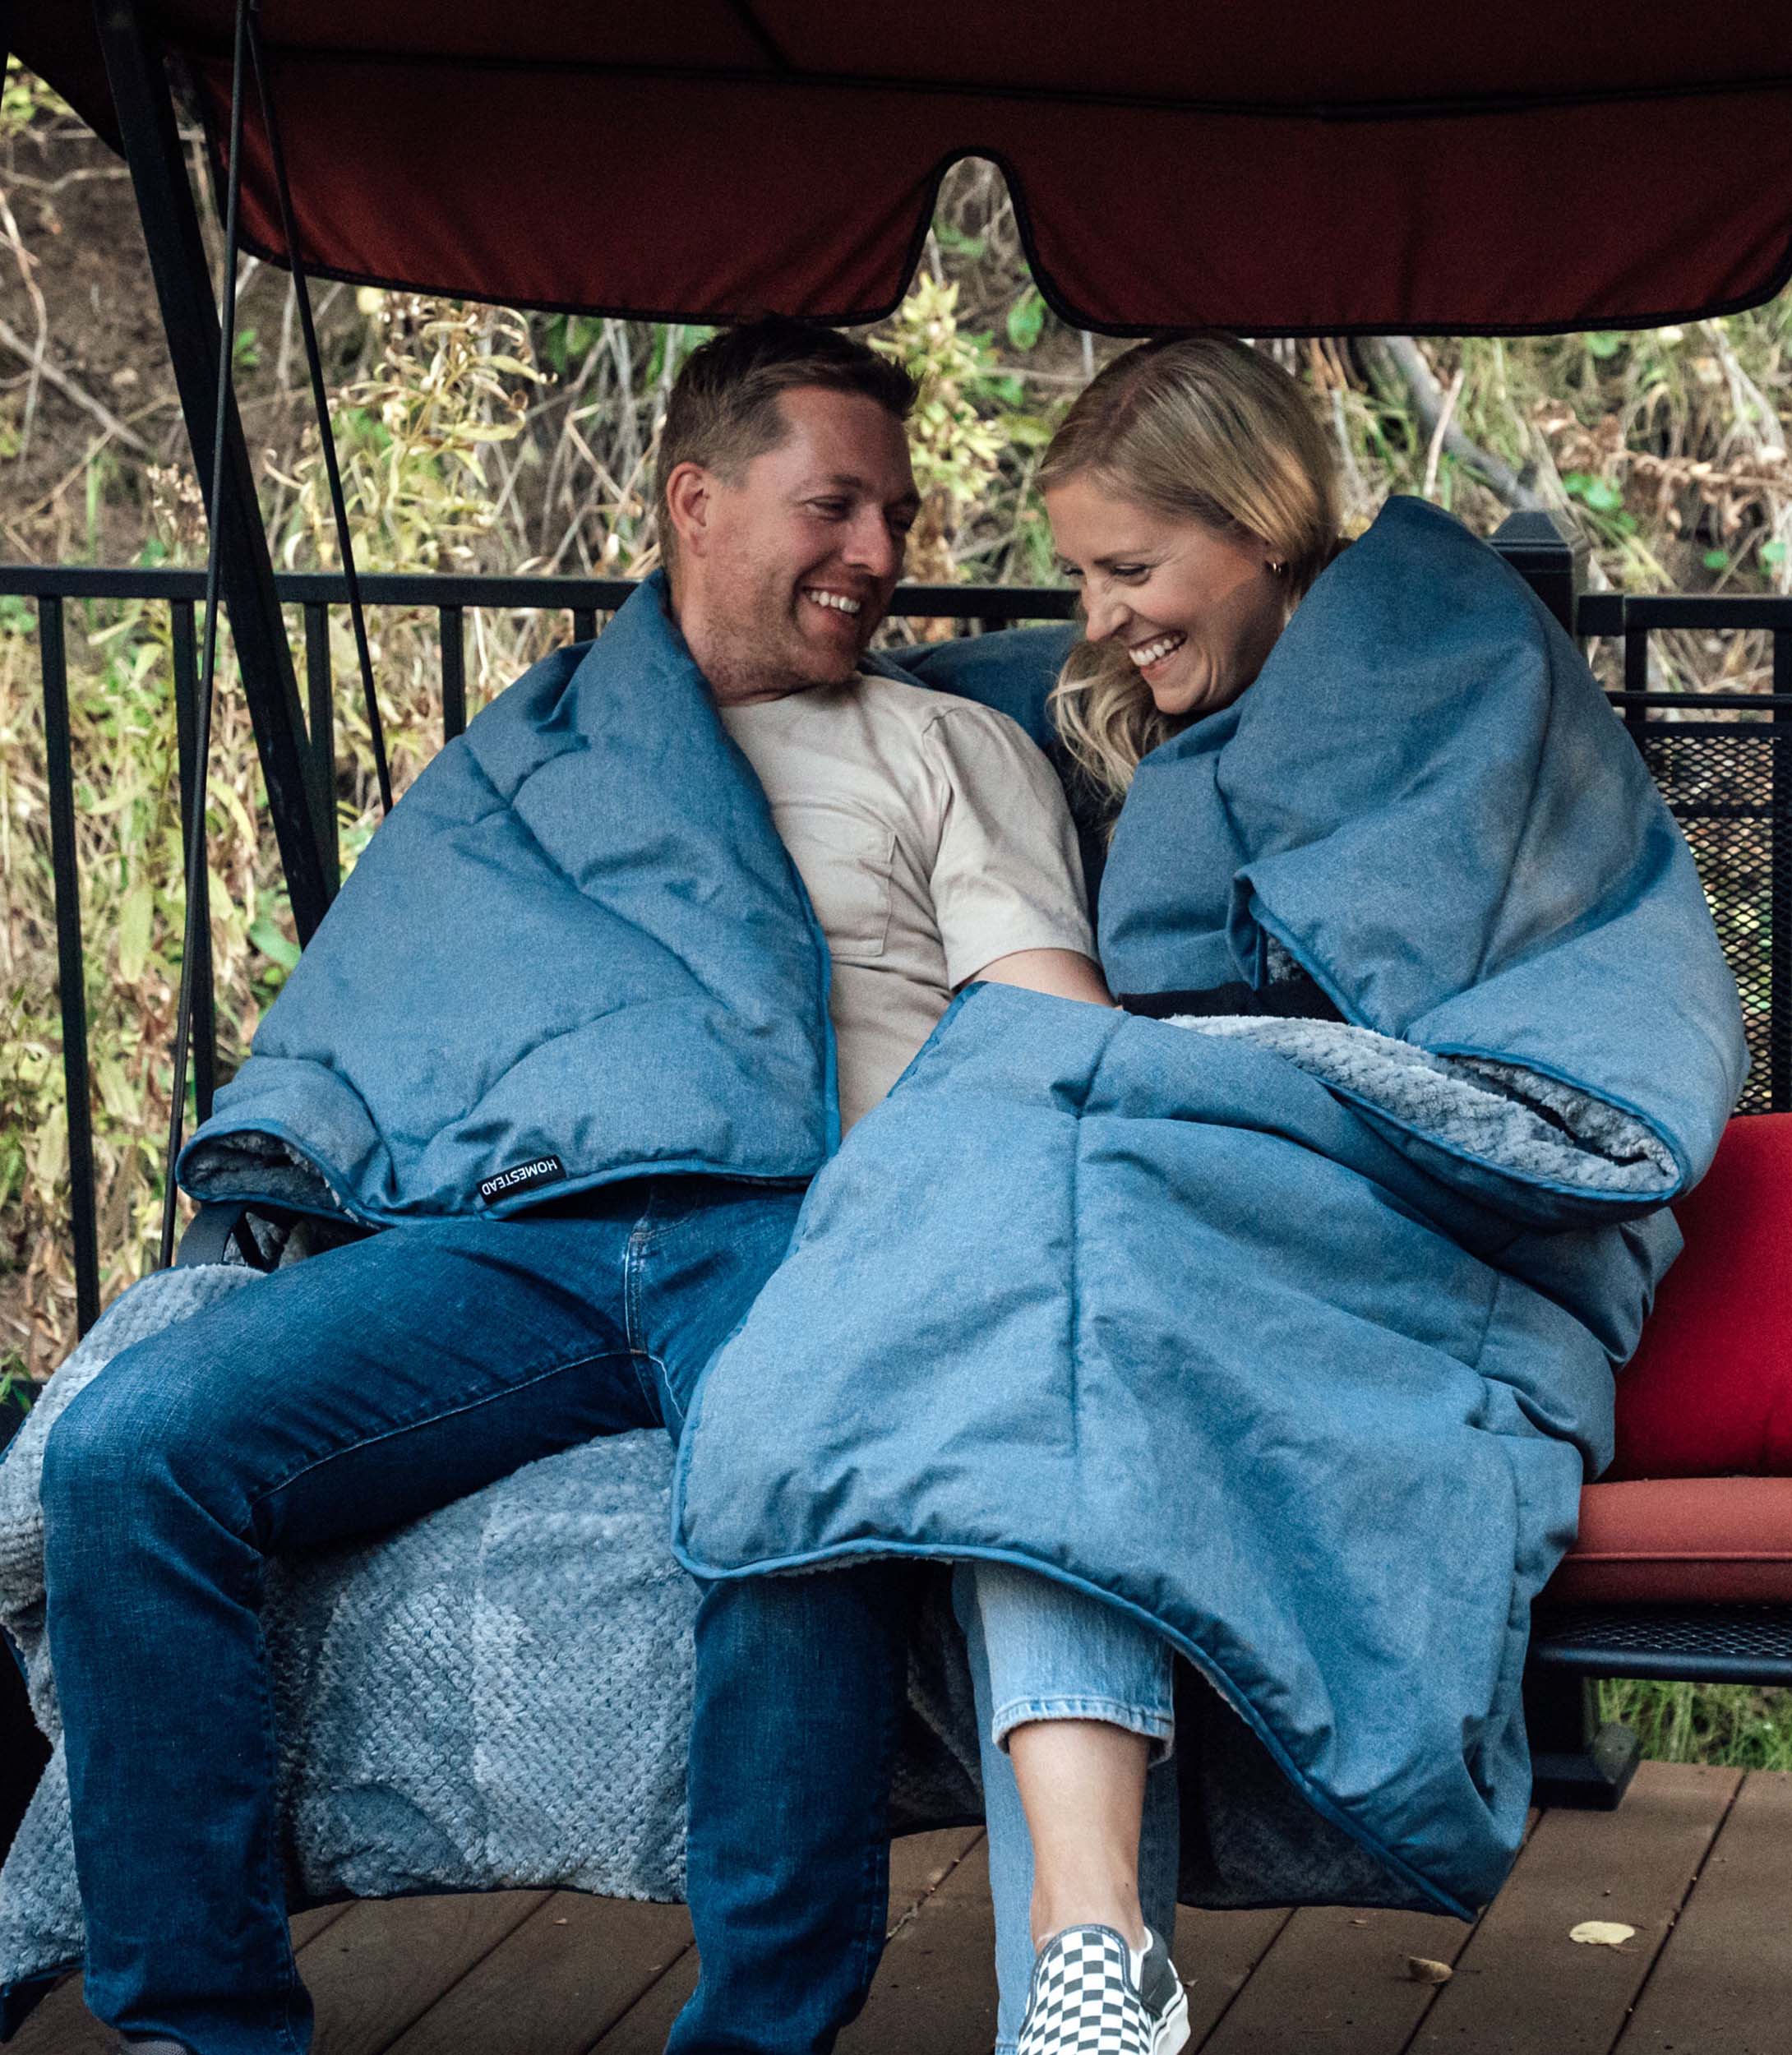 Homestead Cabin Comforter Decke - REG